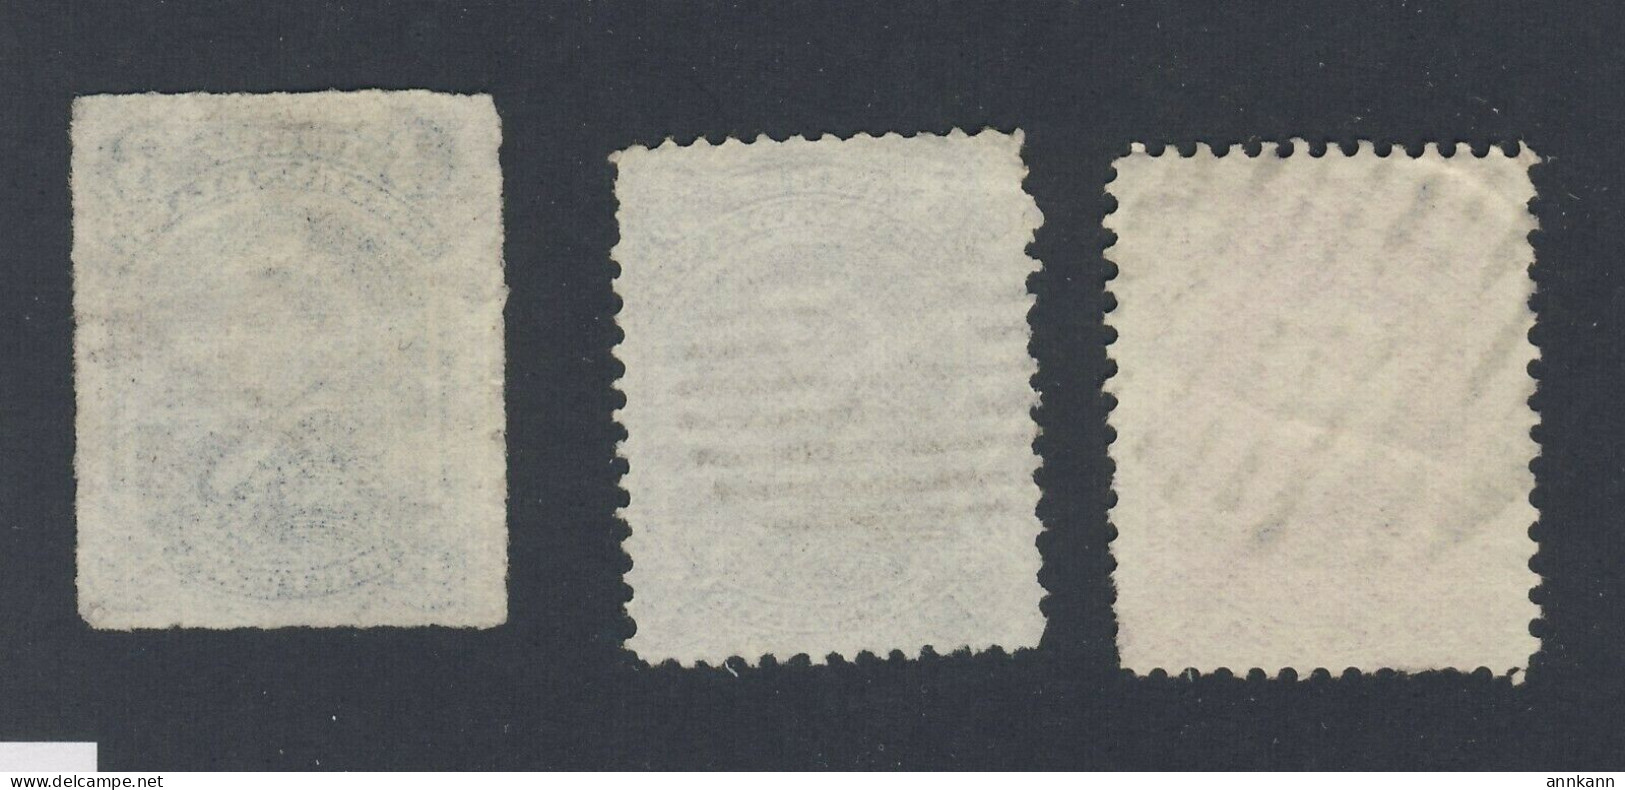 3x Newfoundland Queen Victoria Used Stamps #39-3c #34-3c & #36-3c GV= $87.00 - 1857-1861